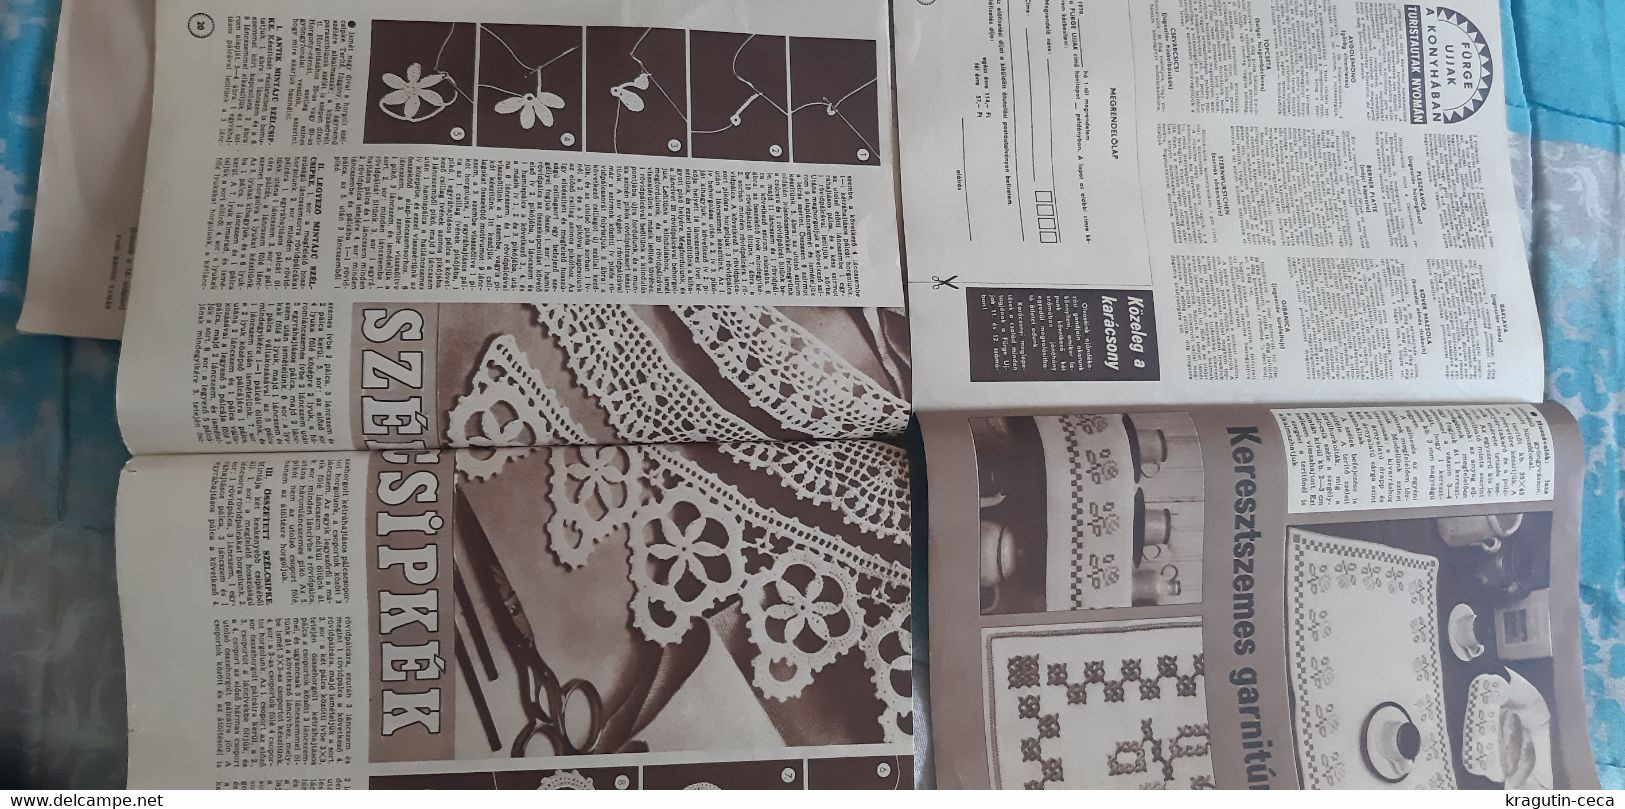 1978 Fürge Ujjak HUNGARY VINTAGE WOMAN FASHION handicrafts crochet LOT MAGAZINE NEWSPAPERS KNIT WOOLWORK Andrea Drahota